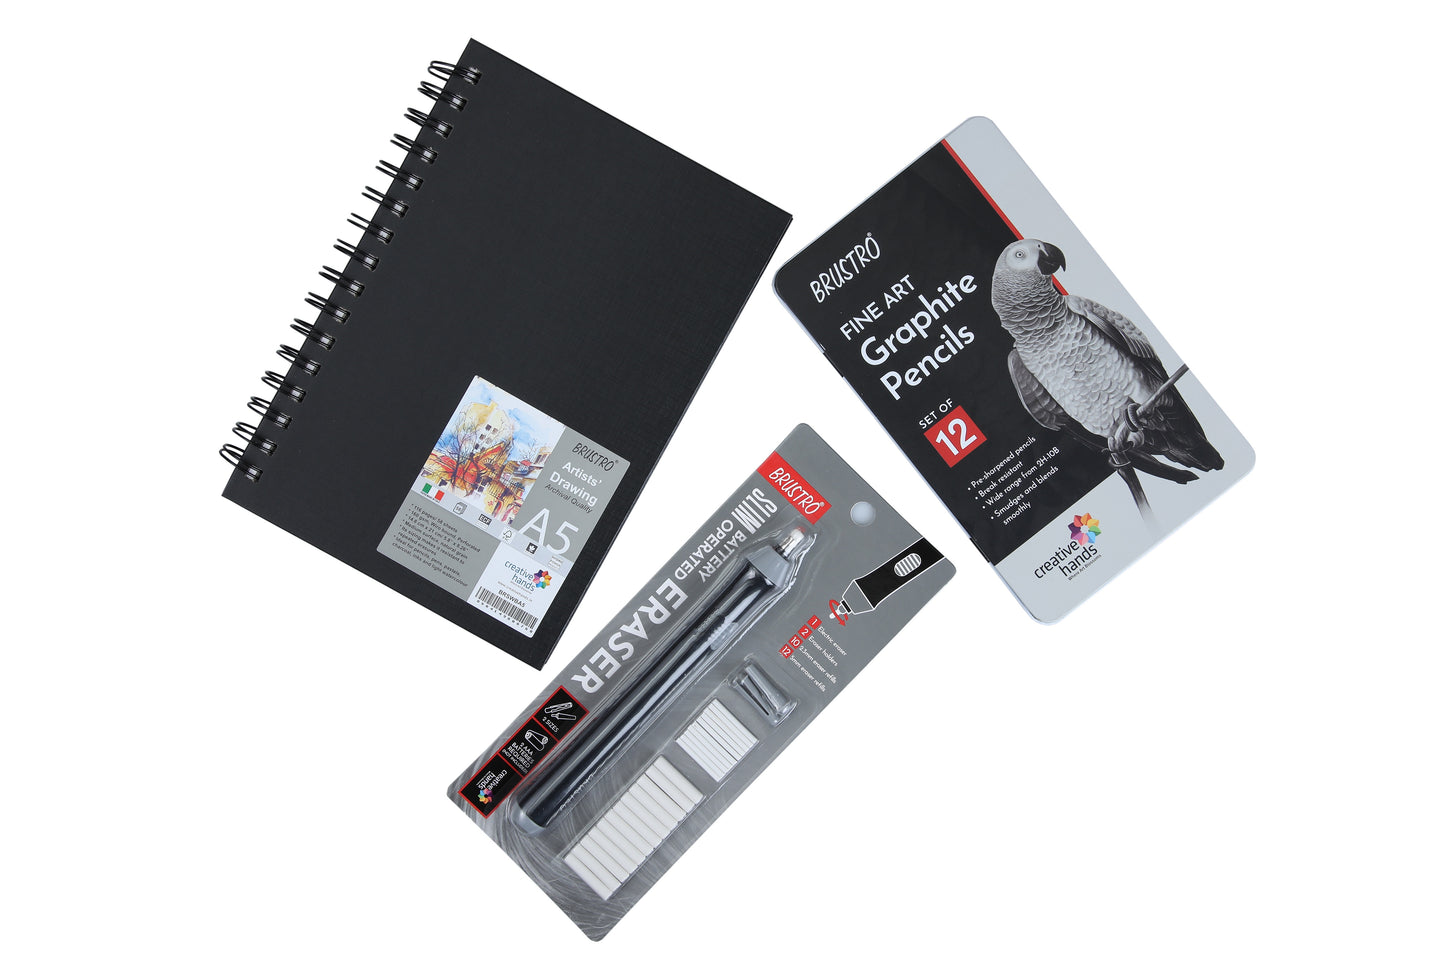 Brustro Slim Battery Operated Eraser + Graphite Pencil Set of 12 + A5 wiro Sketchbook